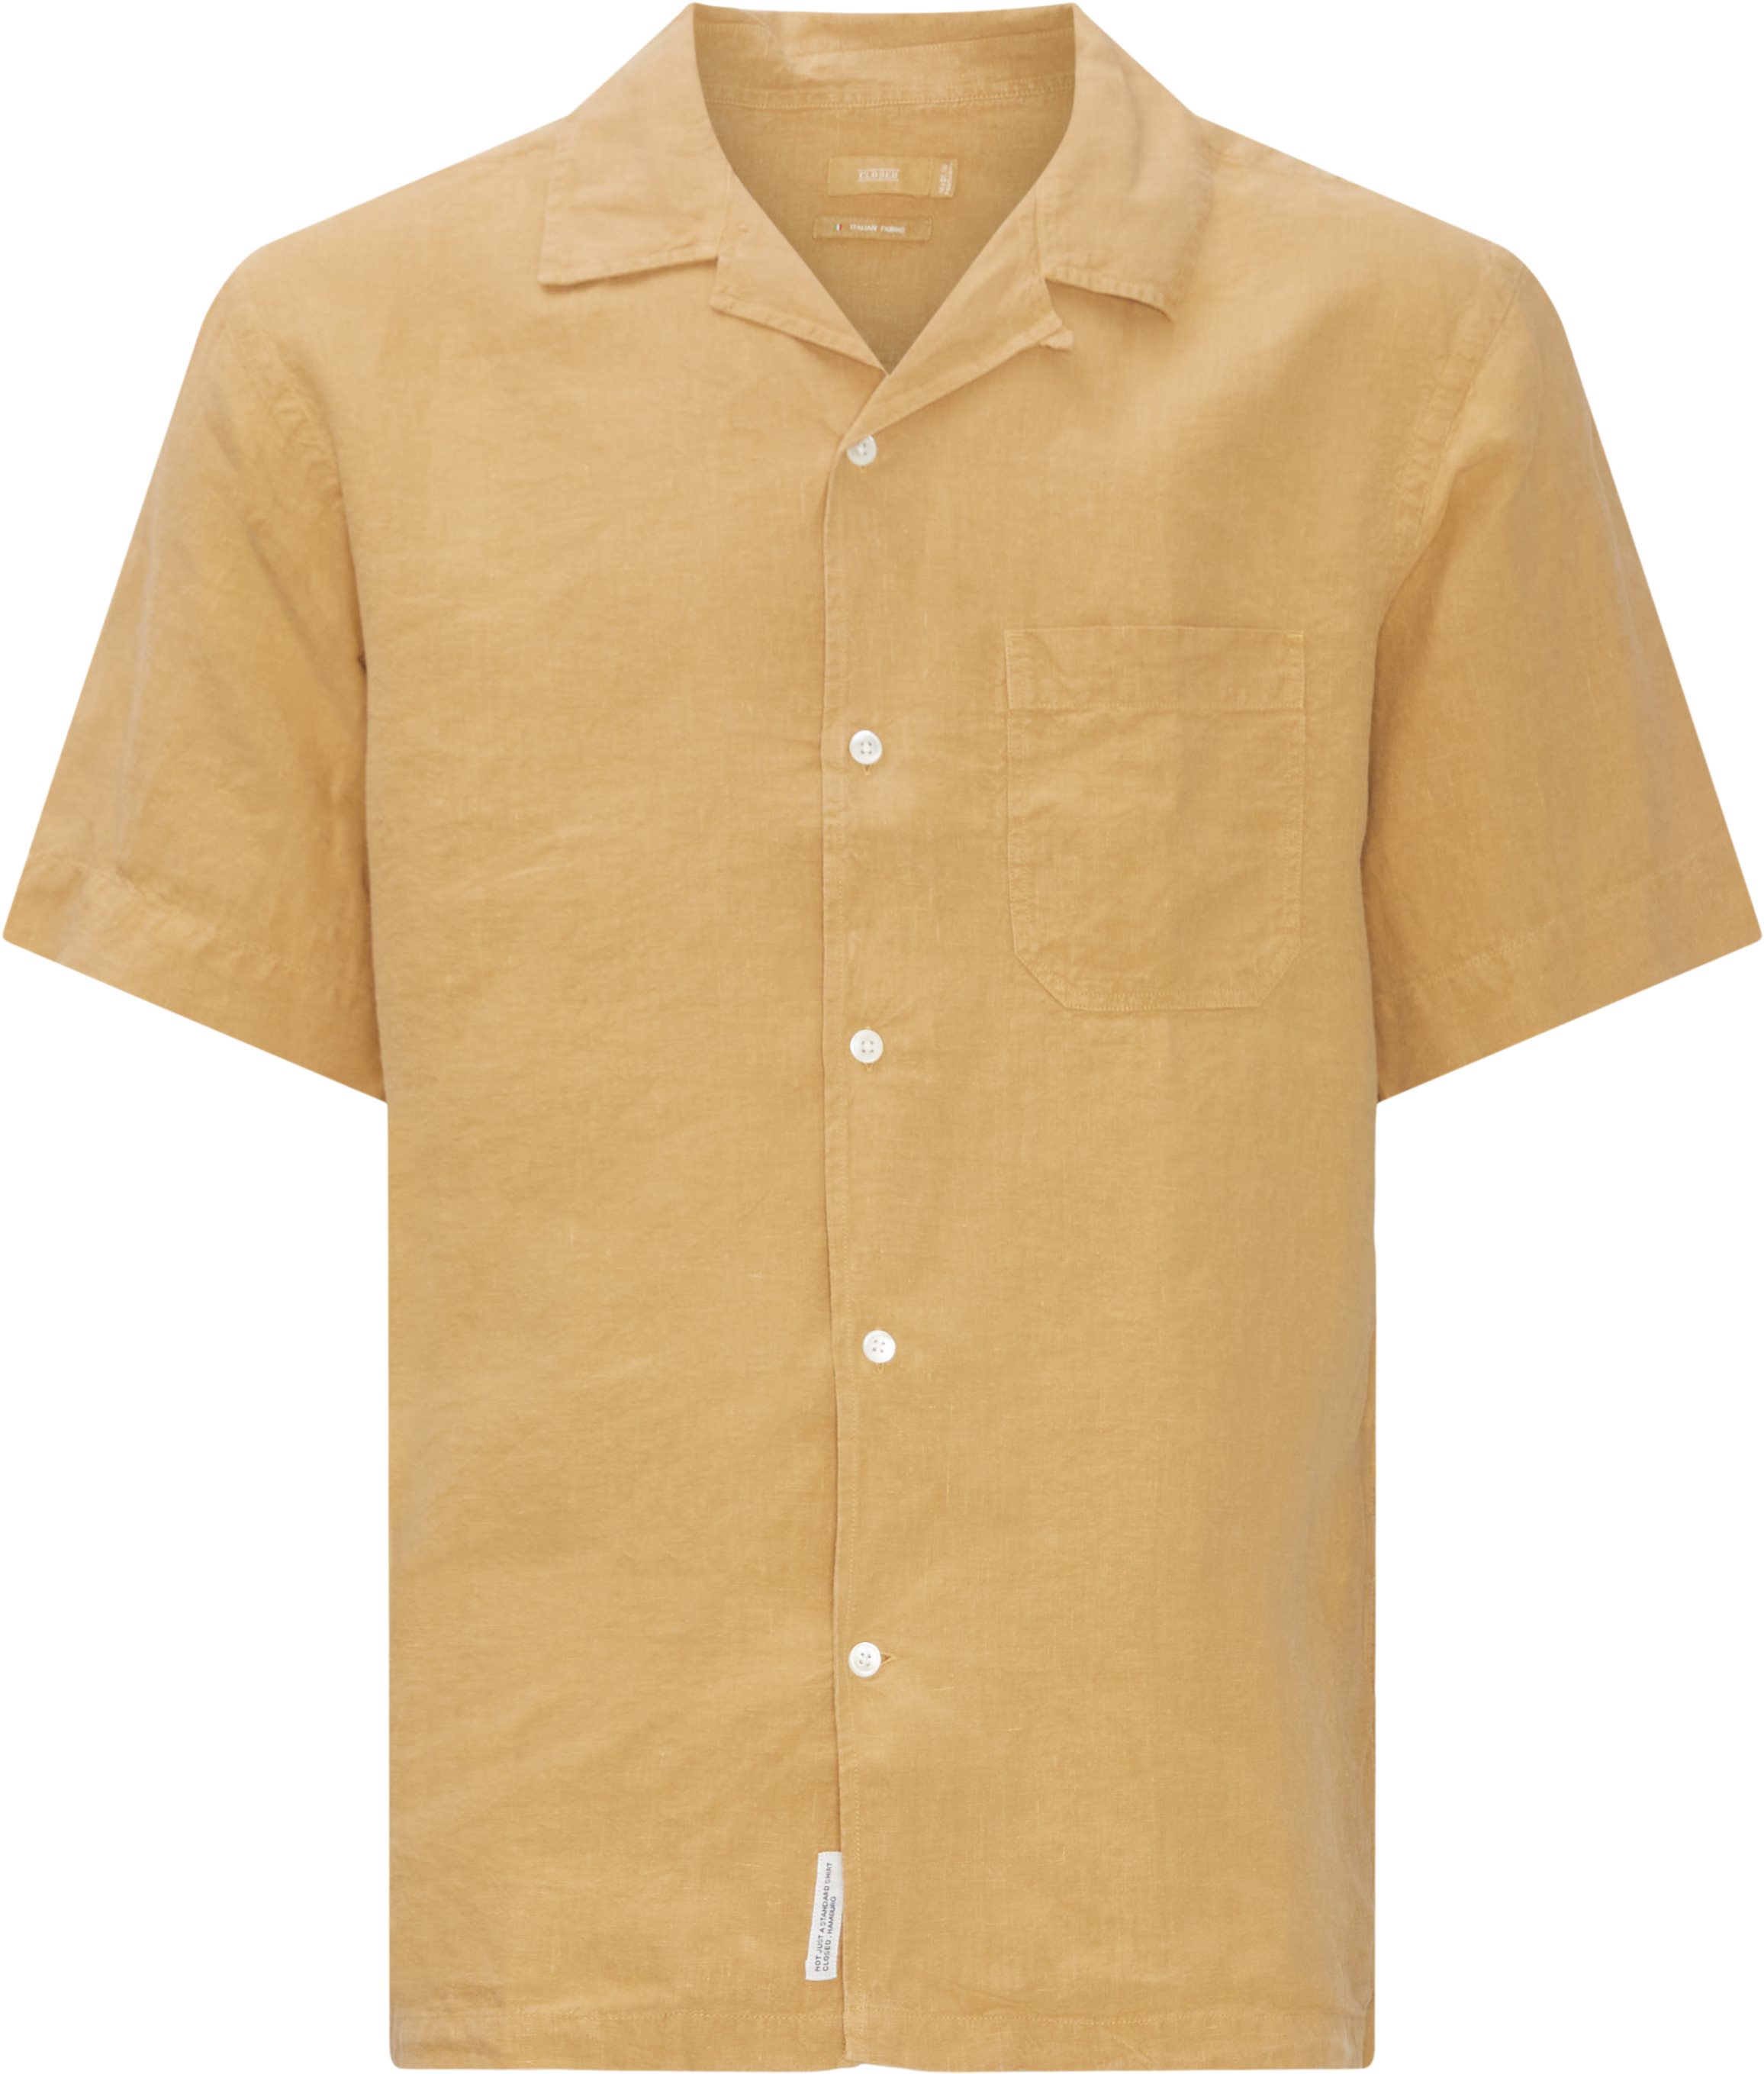 Short-sleeved shirts - Regular fit - Sand